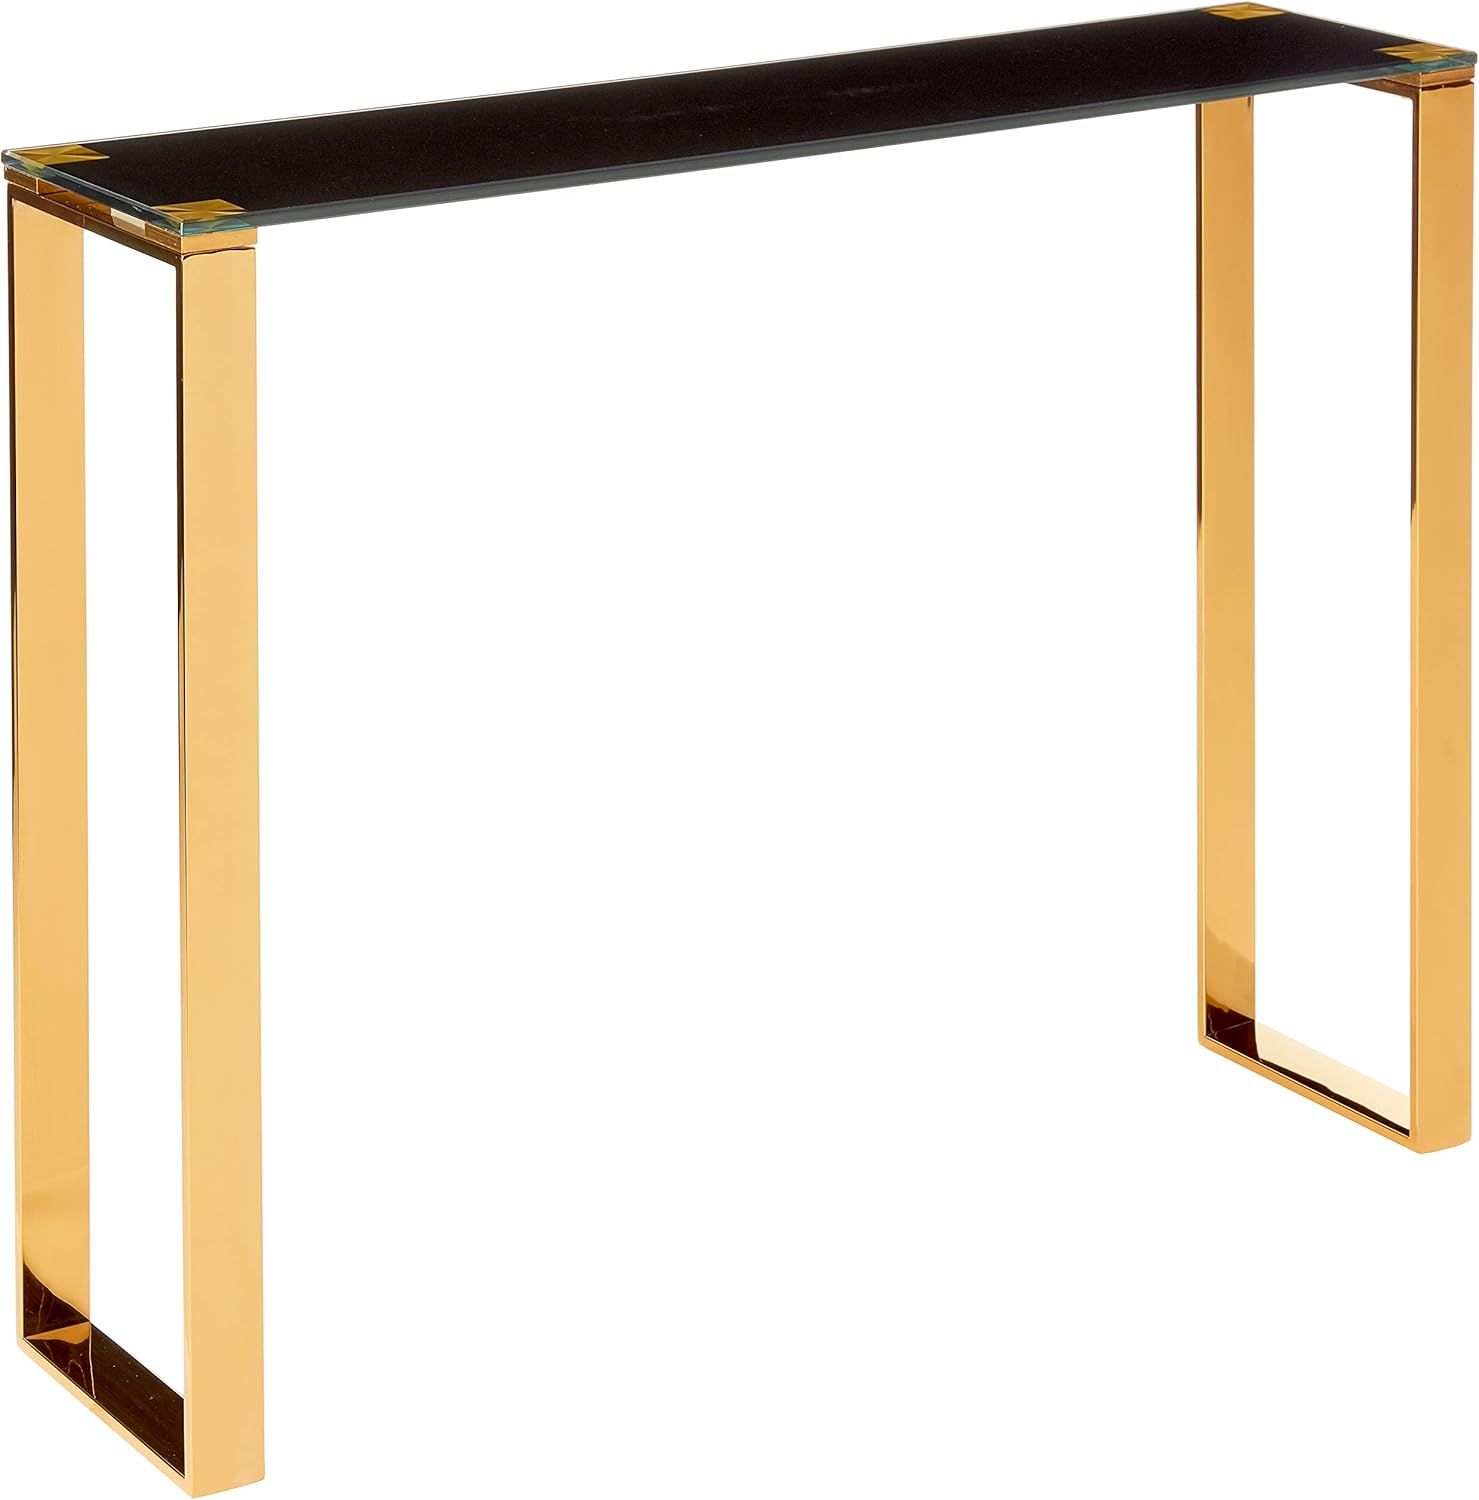 Cortesi Home Remini Narrow Contemporary Glass Console Table in Polished Gold Finish, Black Glass | Amazon (US)